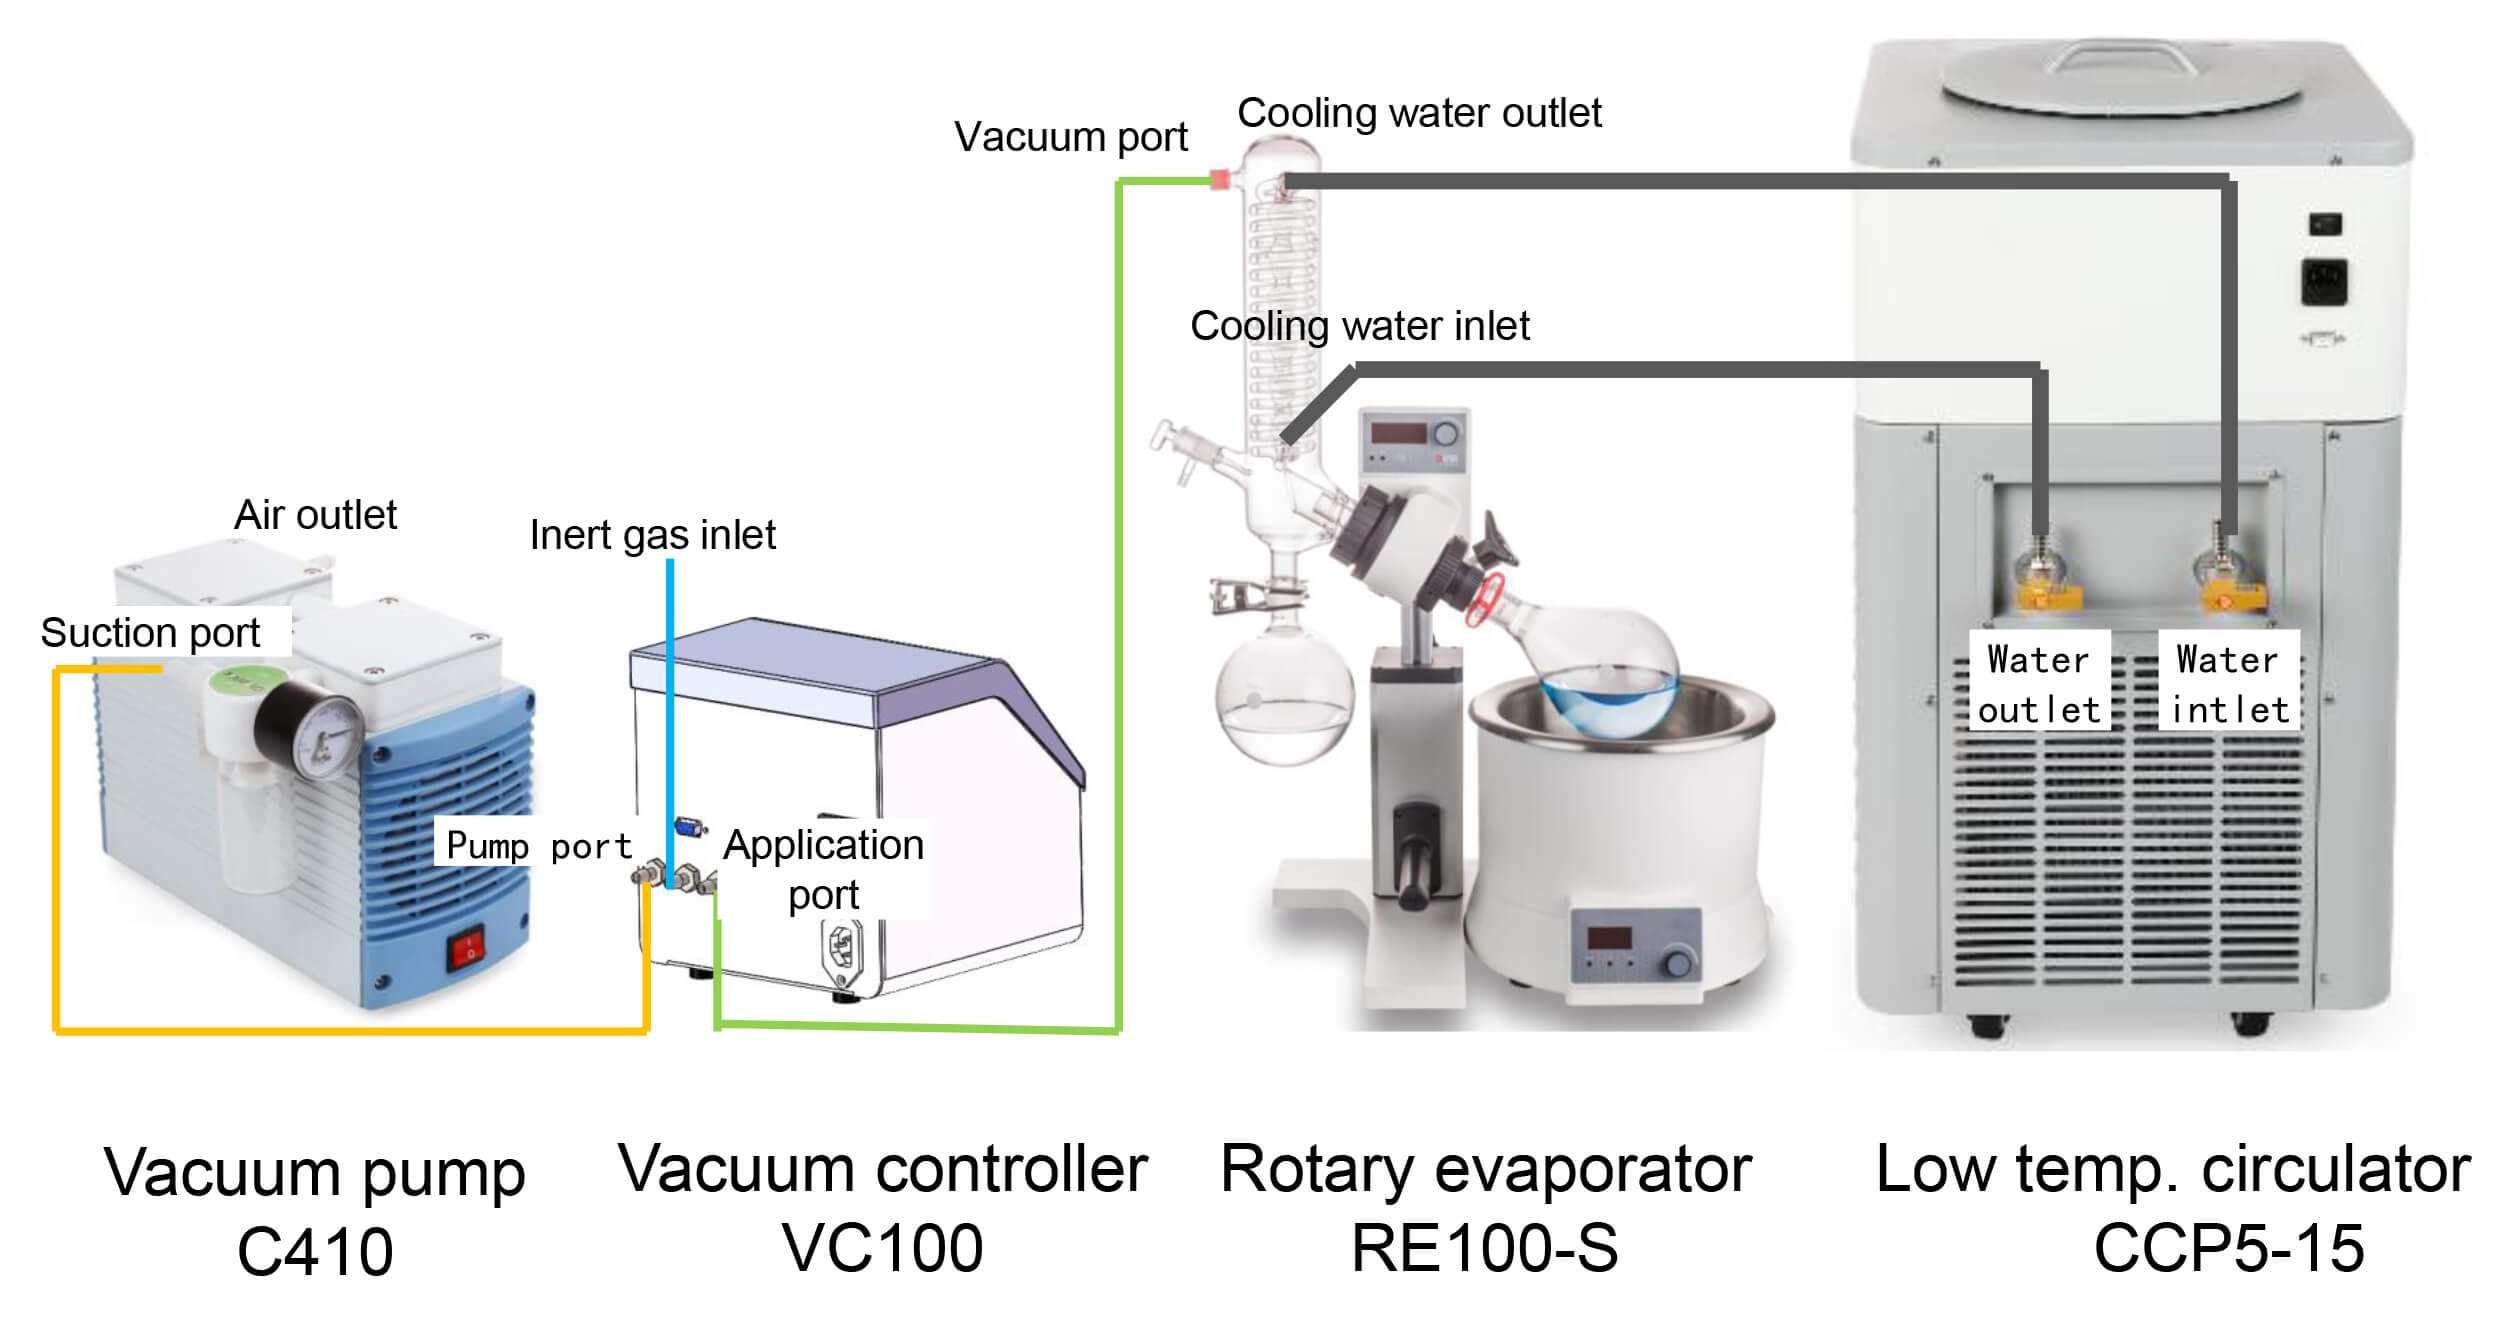 lab rotary evaporator